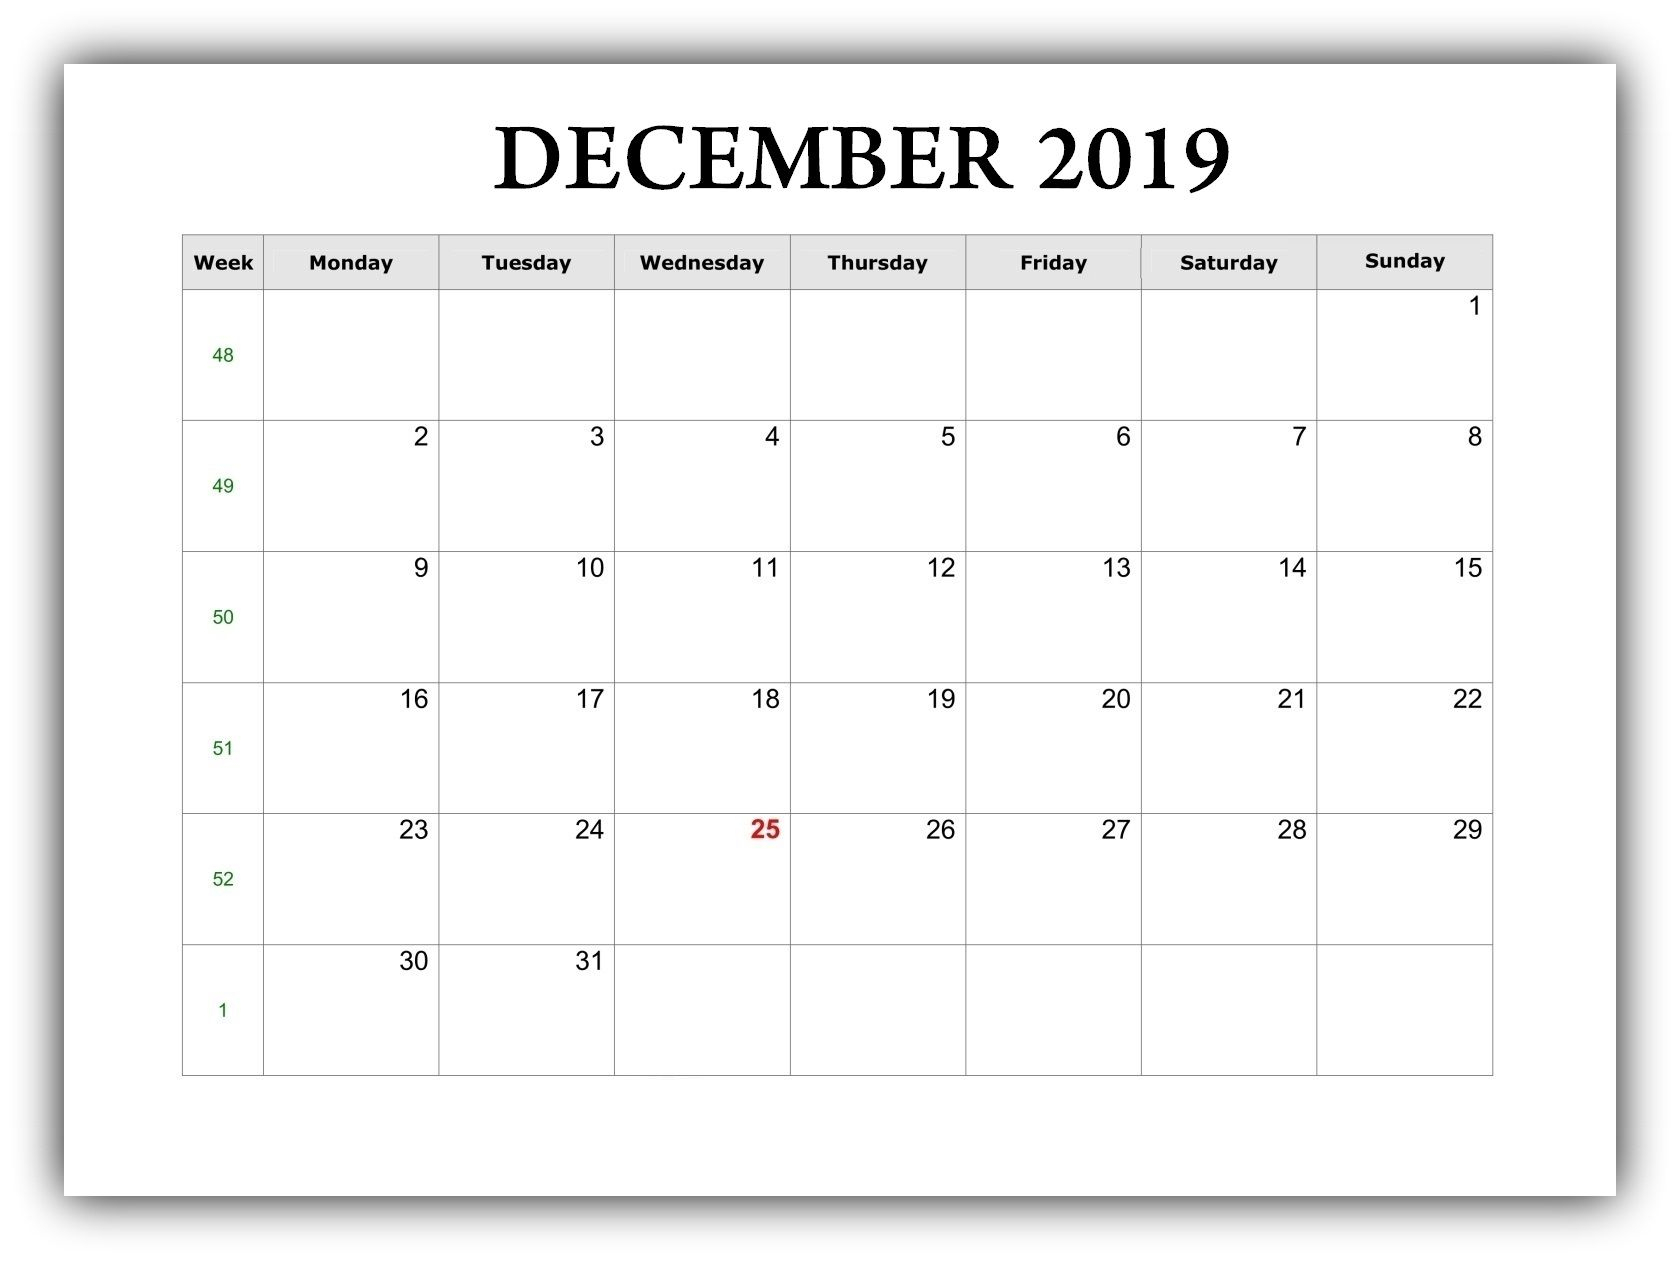 December 2019 Blank Calendar Page | Blank Calendar Pages regarding December Win Calendar